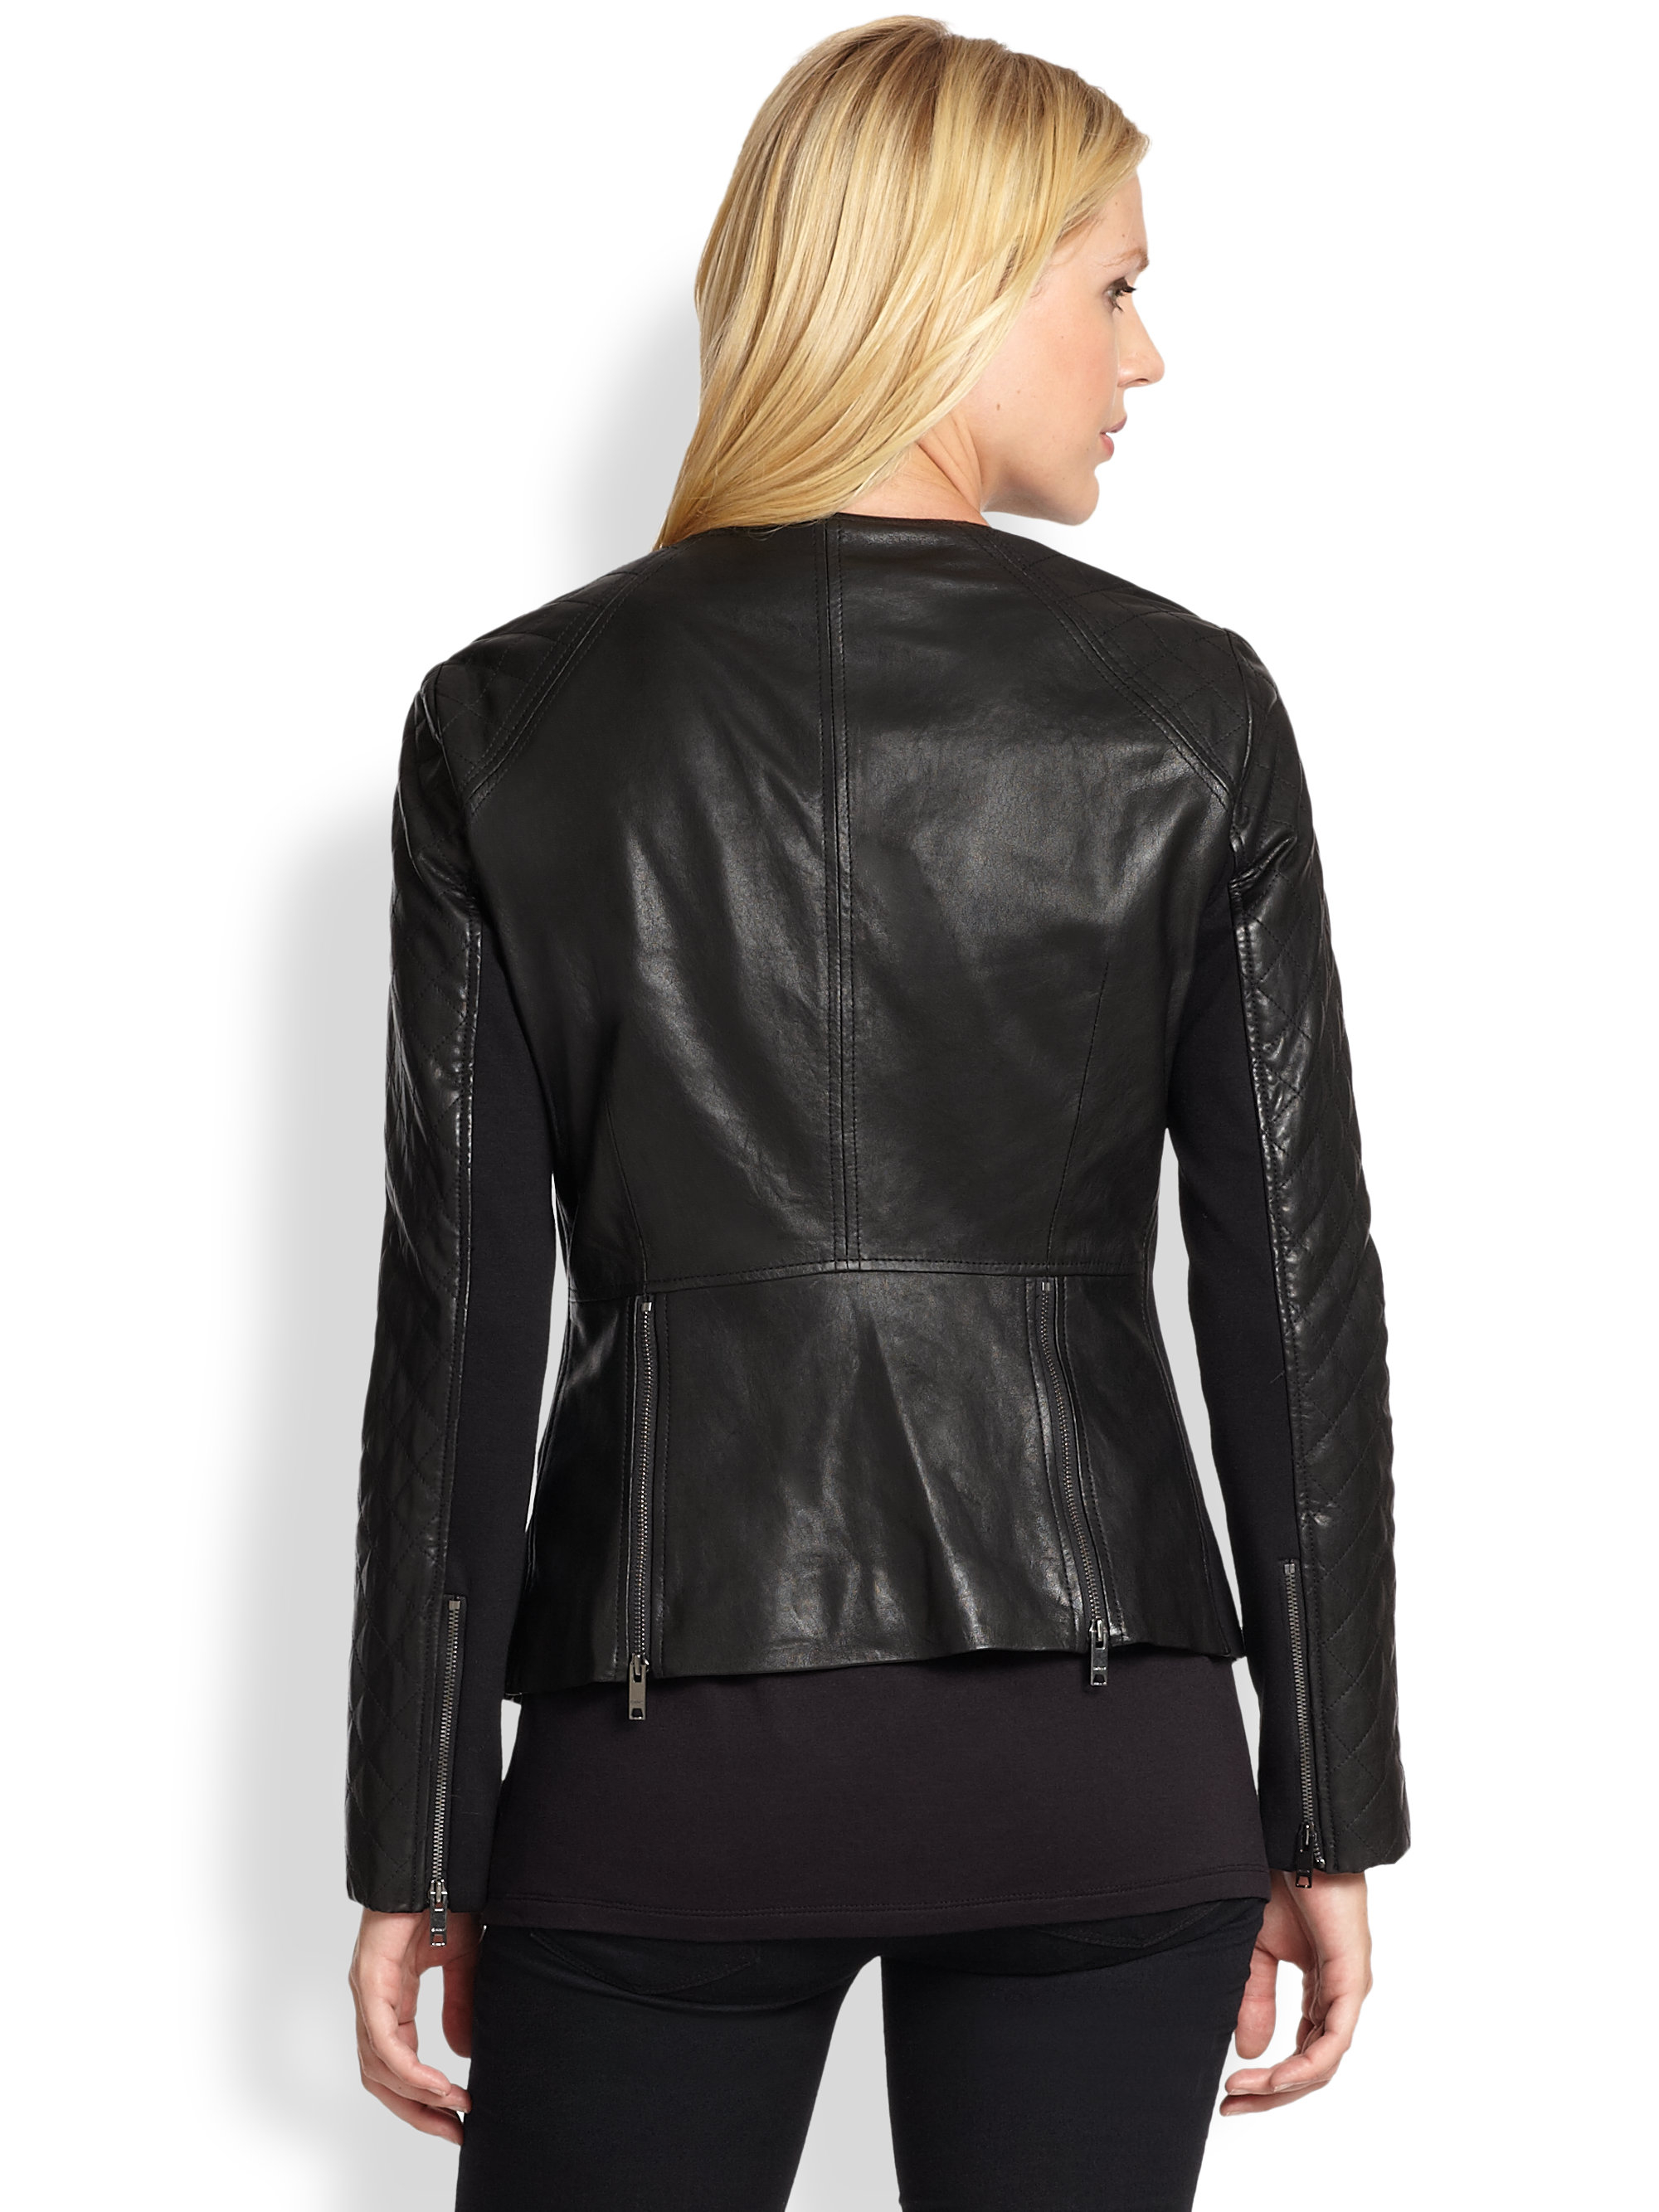 Lyst - Dkny Leather Moto Jacket in Black